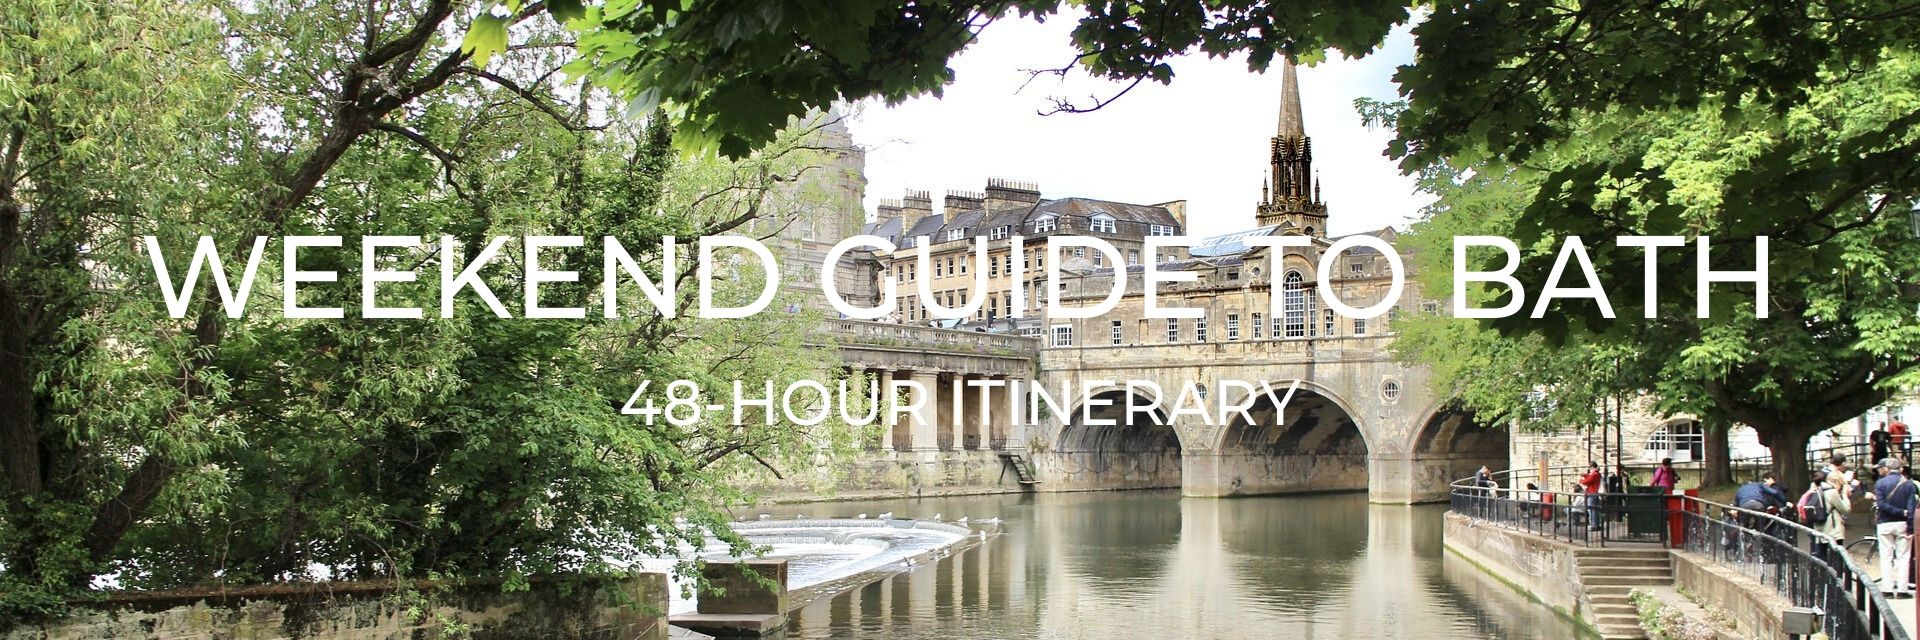 Weekend Guide to Bath 48 Hour Itinerary Desktop Header